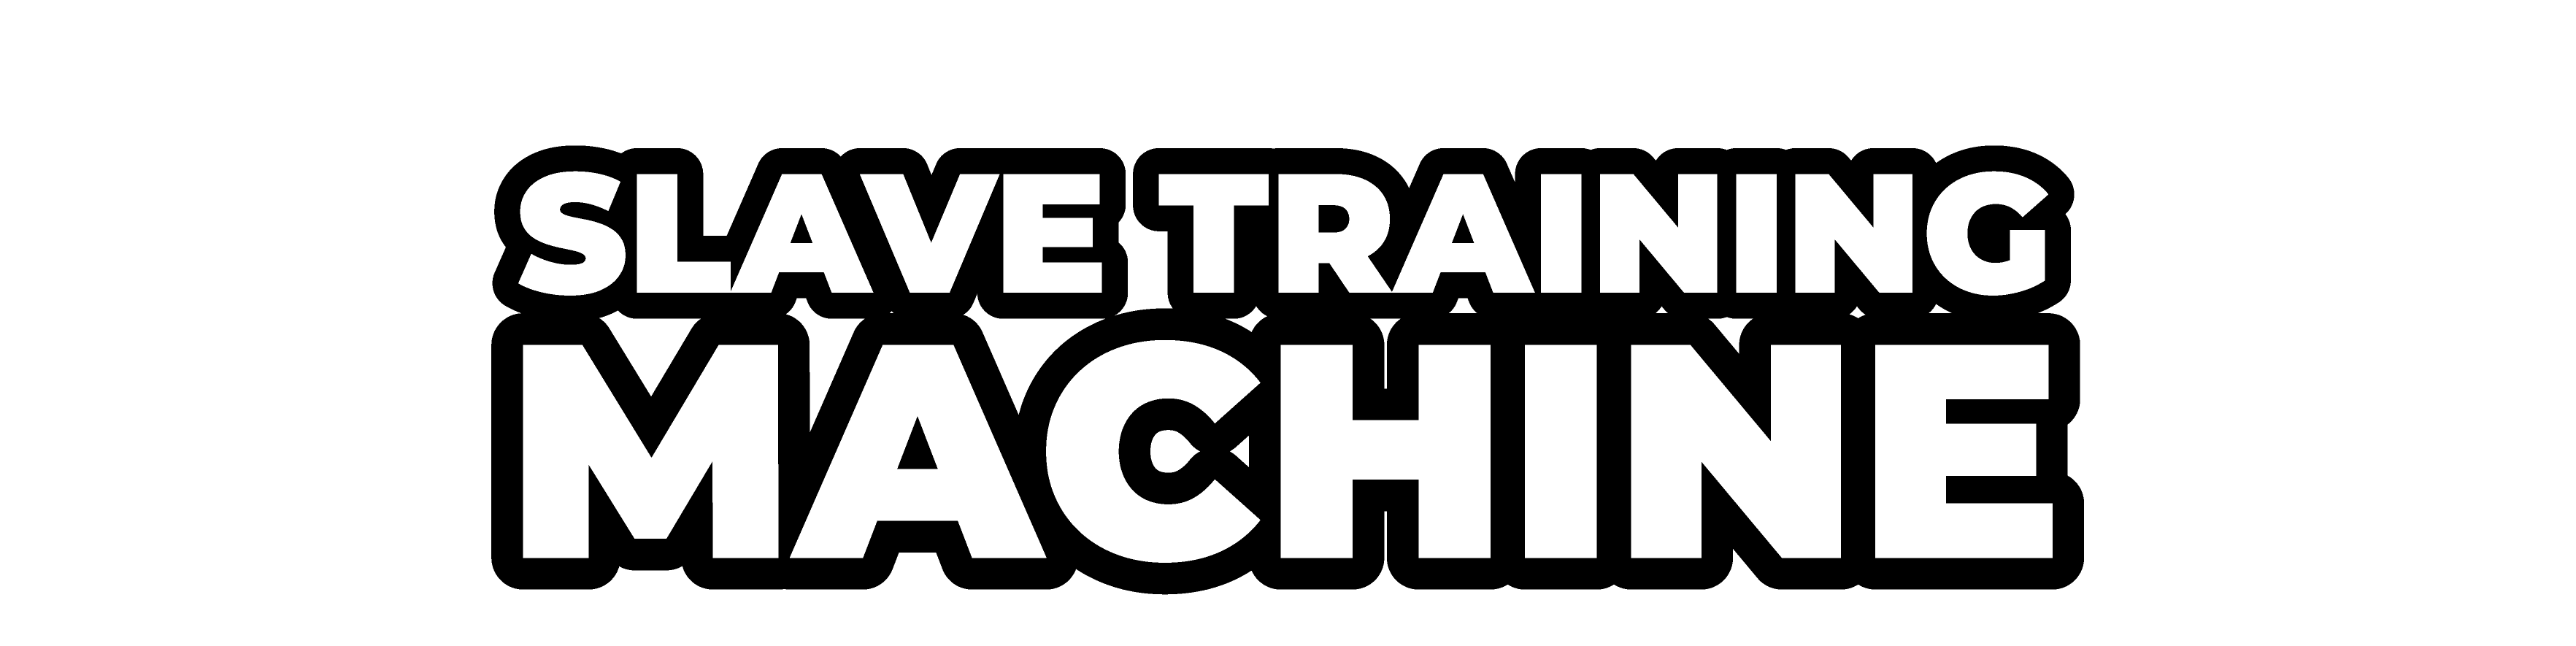 Slave Training Machine poster